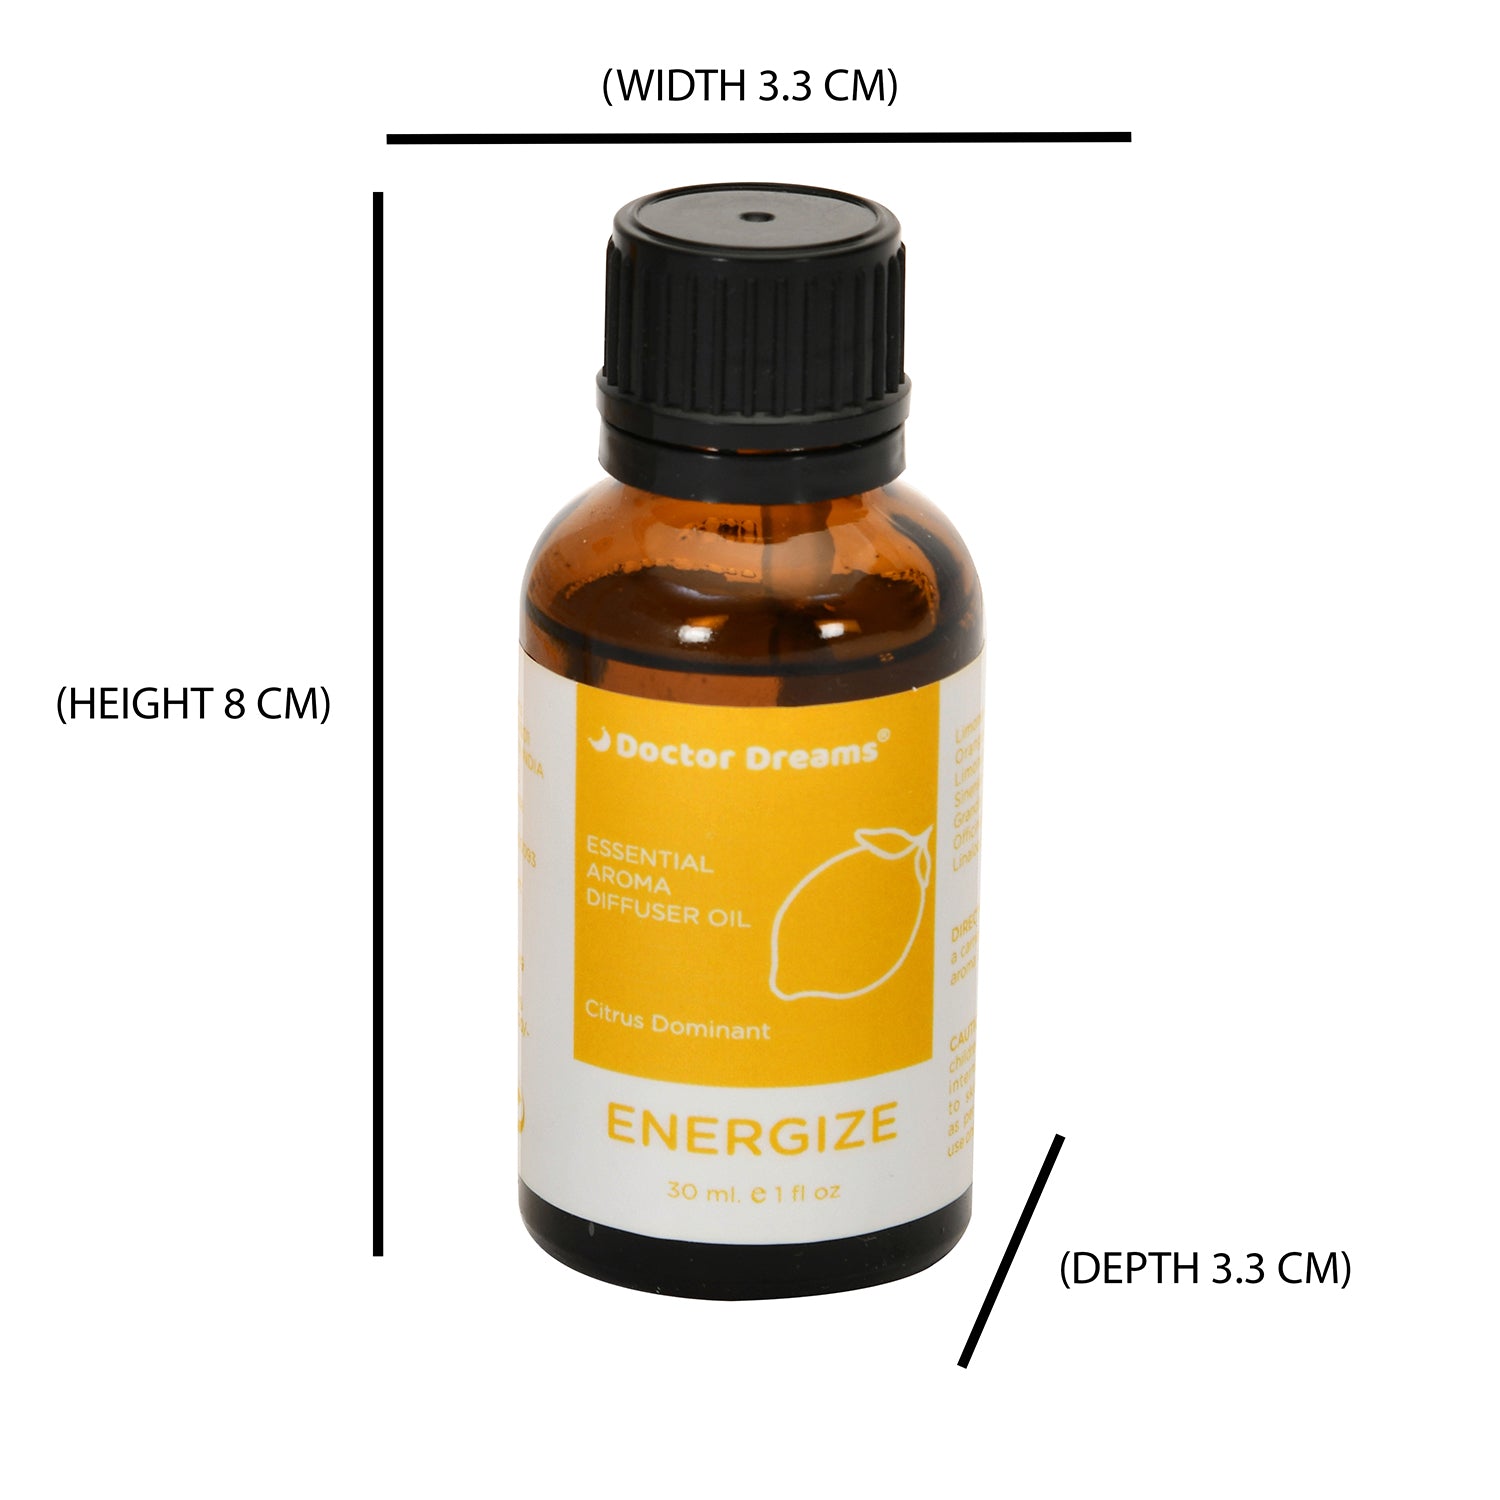 Citrus-rich essential aroma oil (energize)